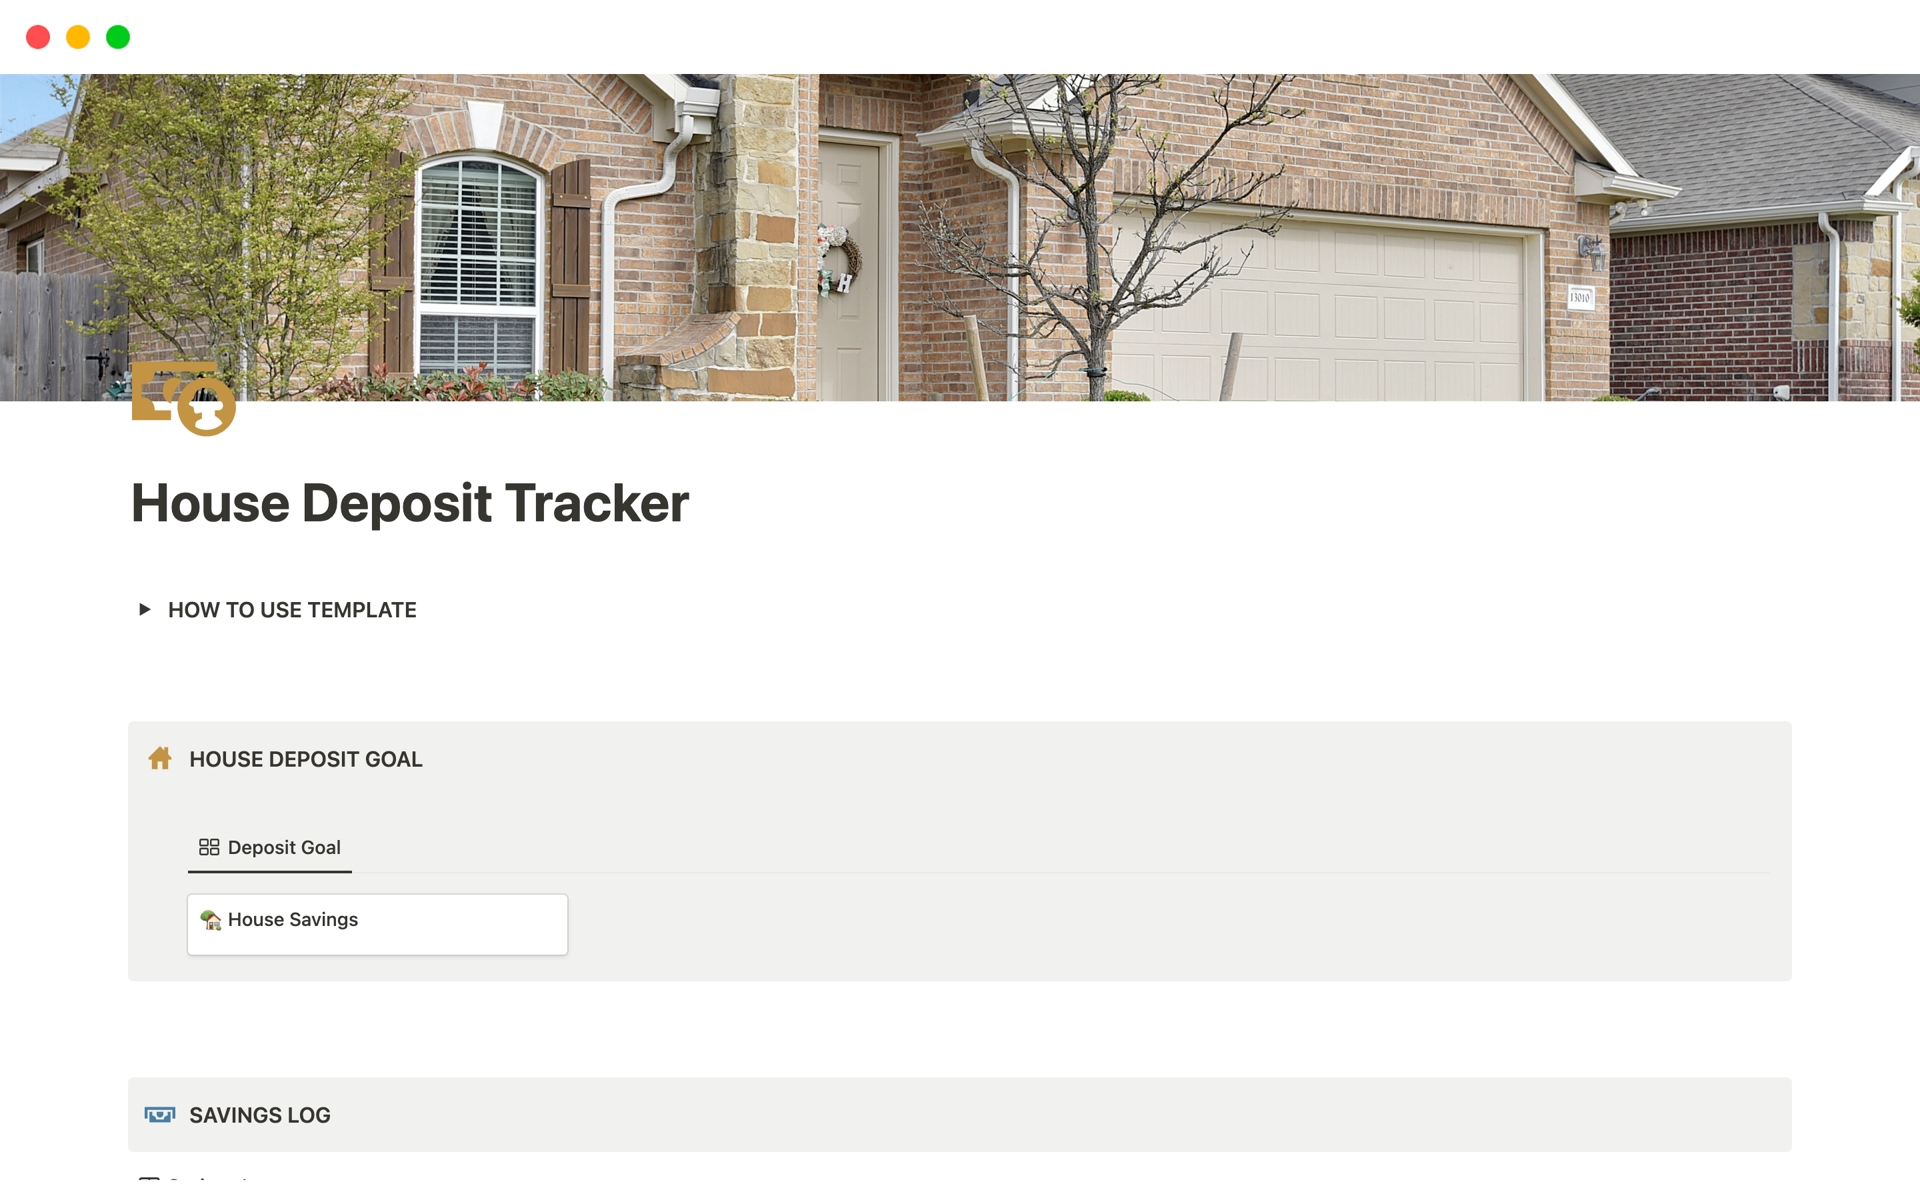 Vista previa de plantilla para House Deposit Tracker